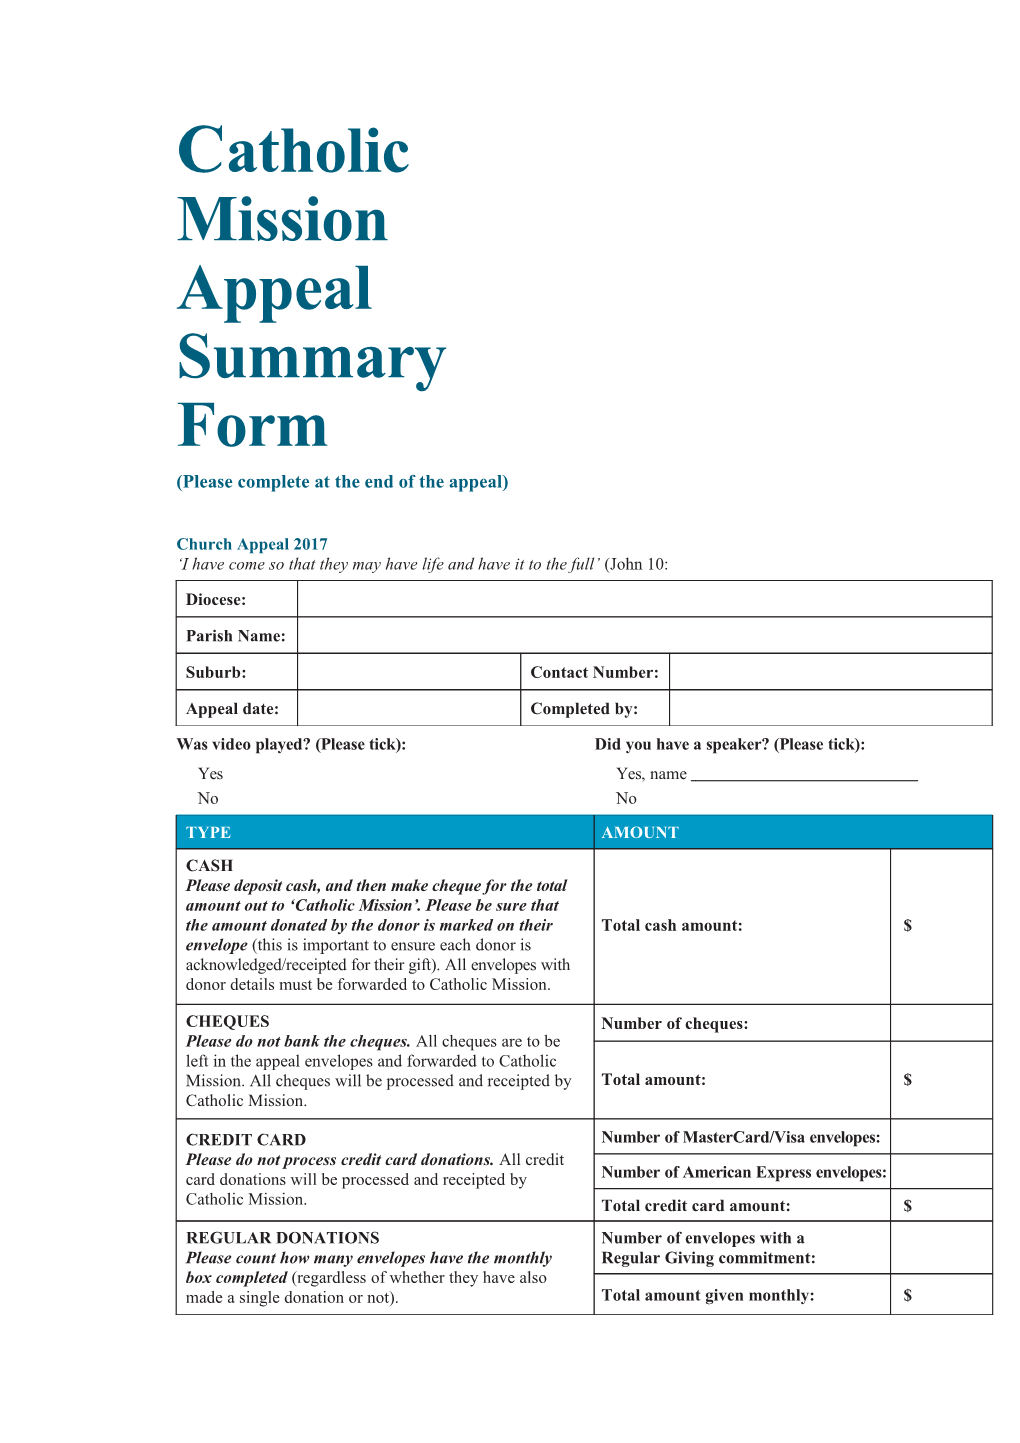 Catholic Mission Appeal Summary Form